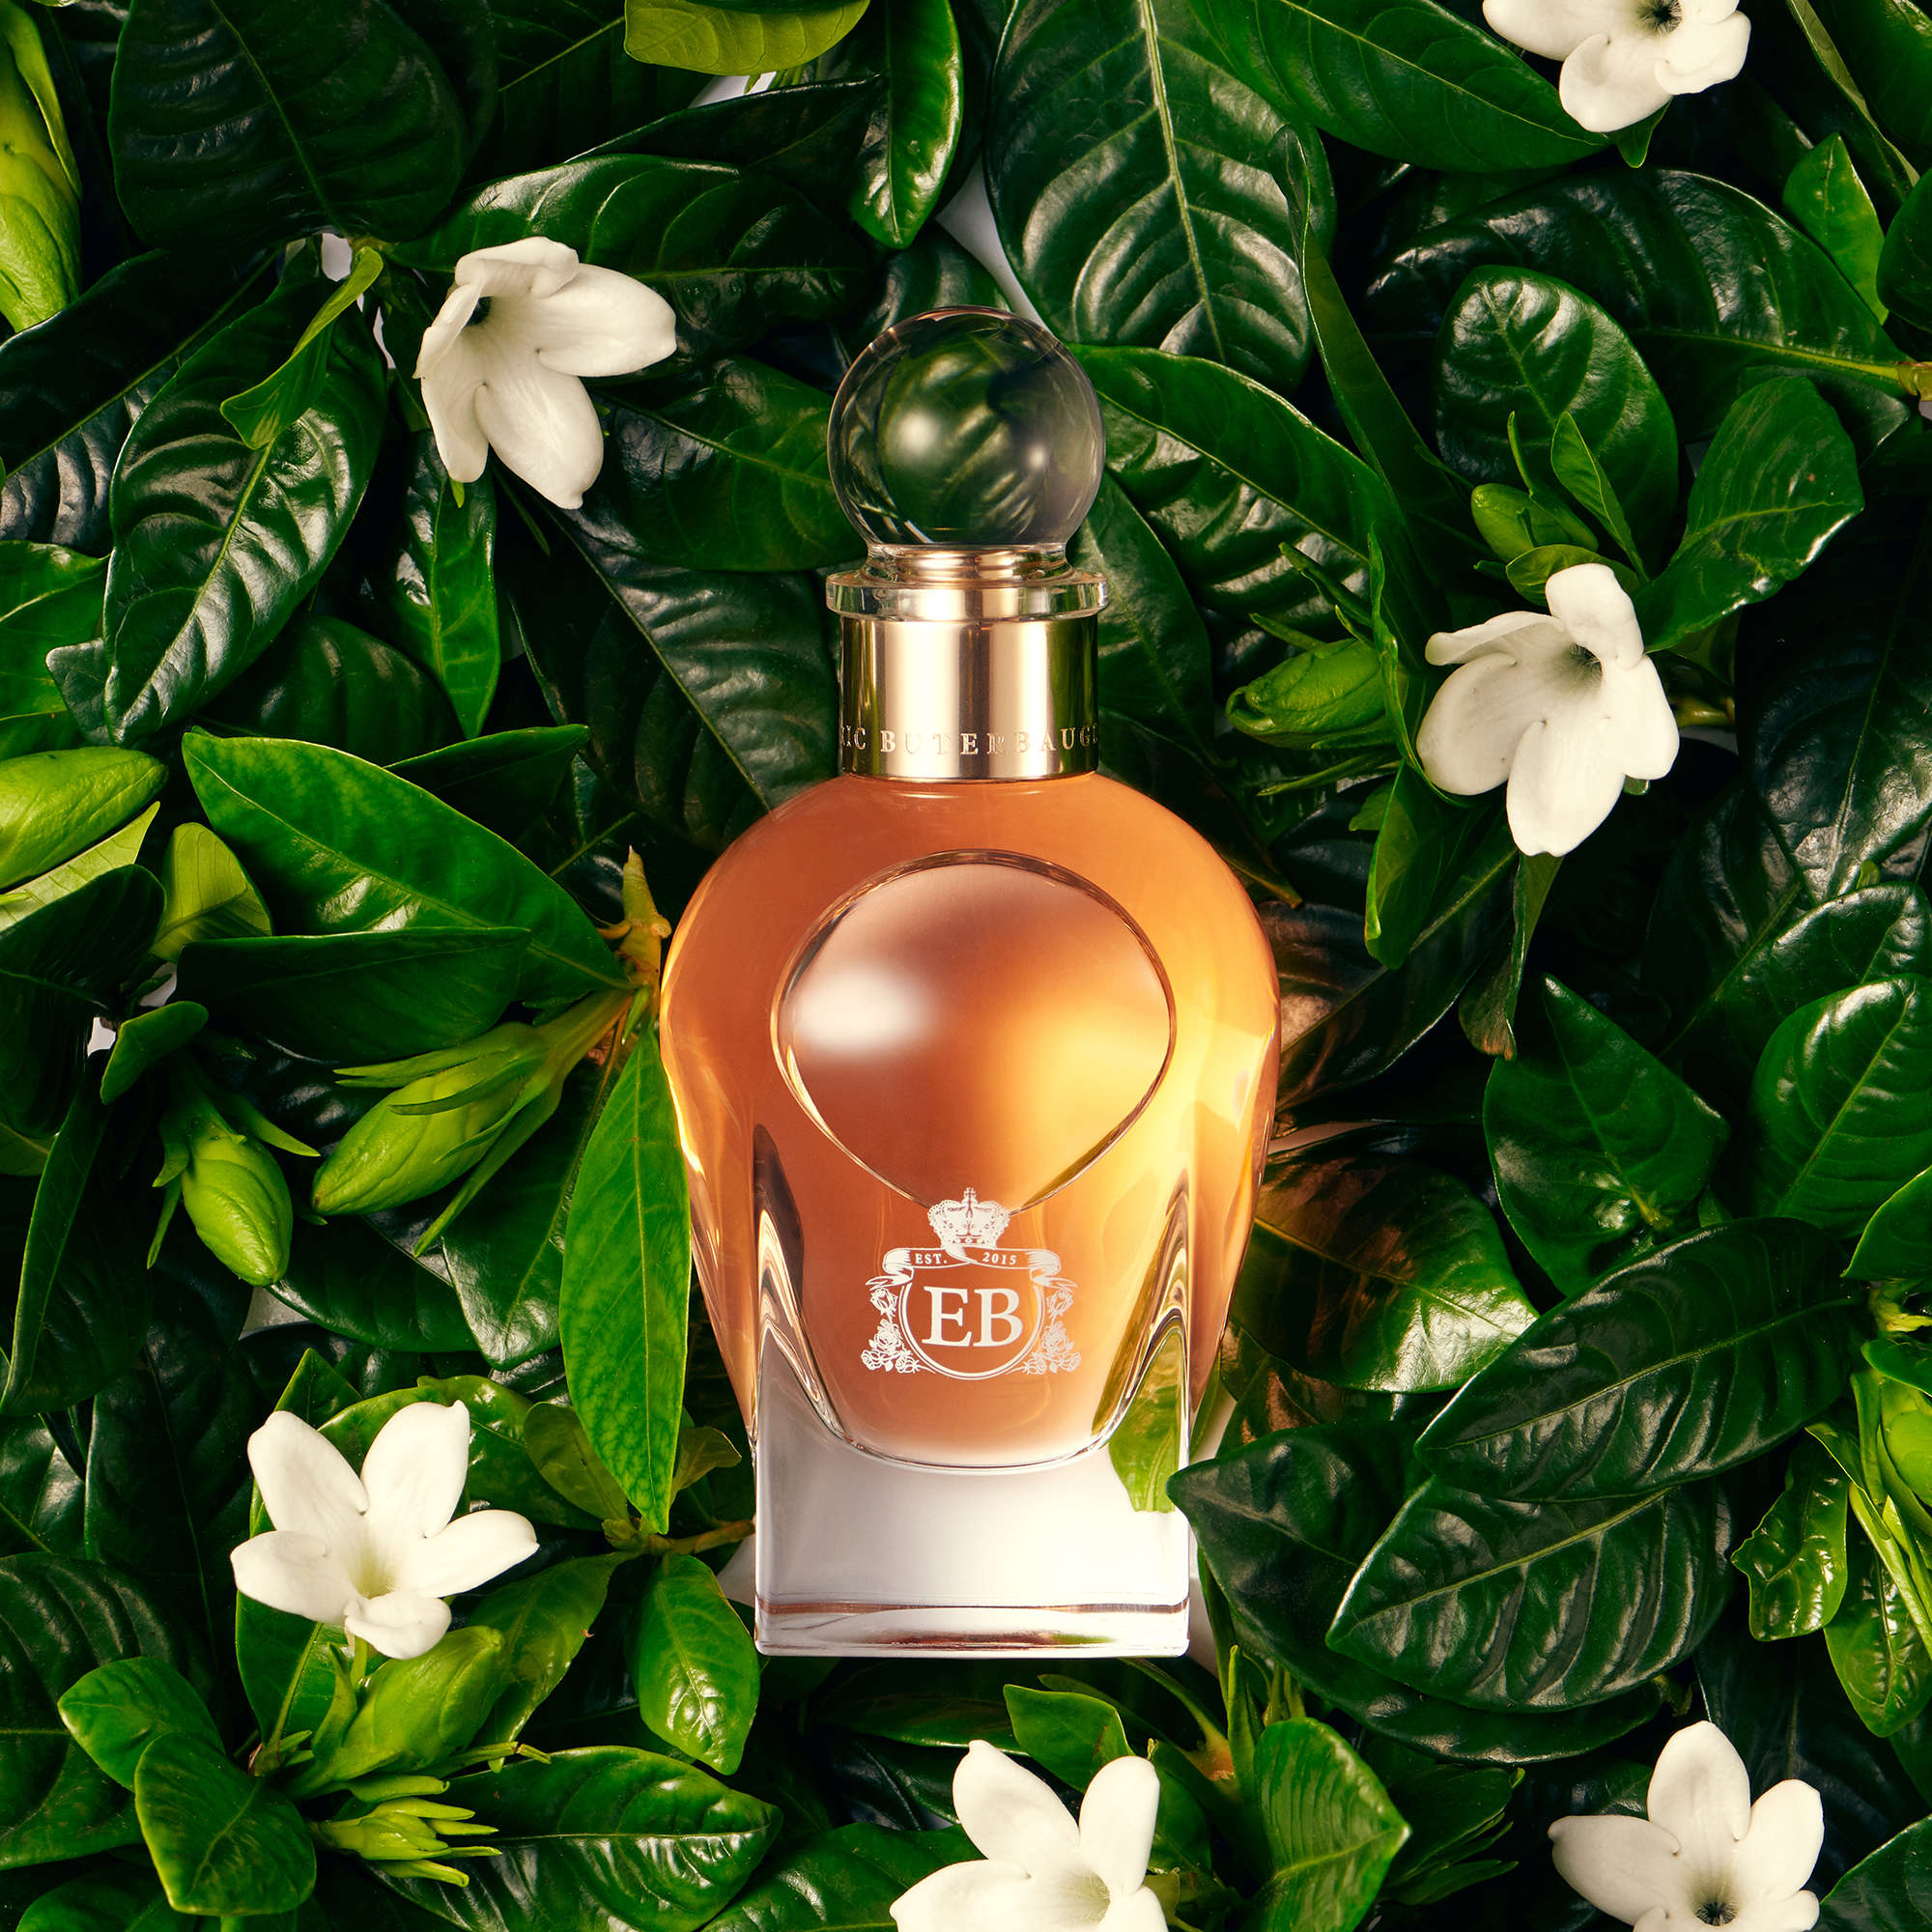 Jo Malone Orange Blossom Perfume Duplicate